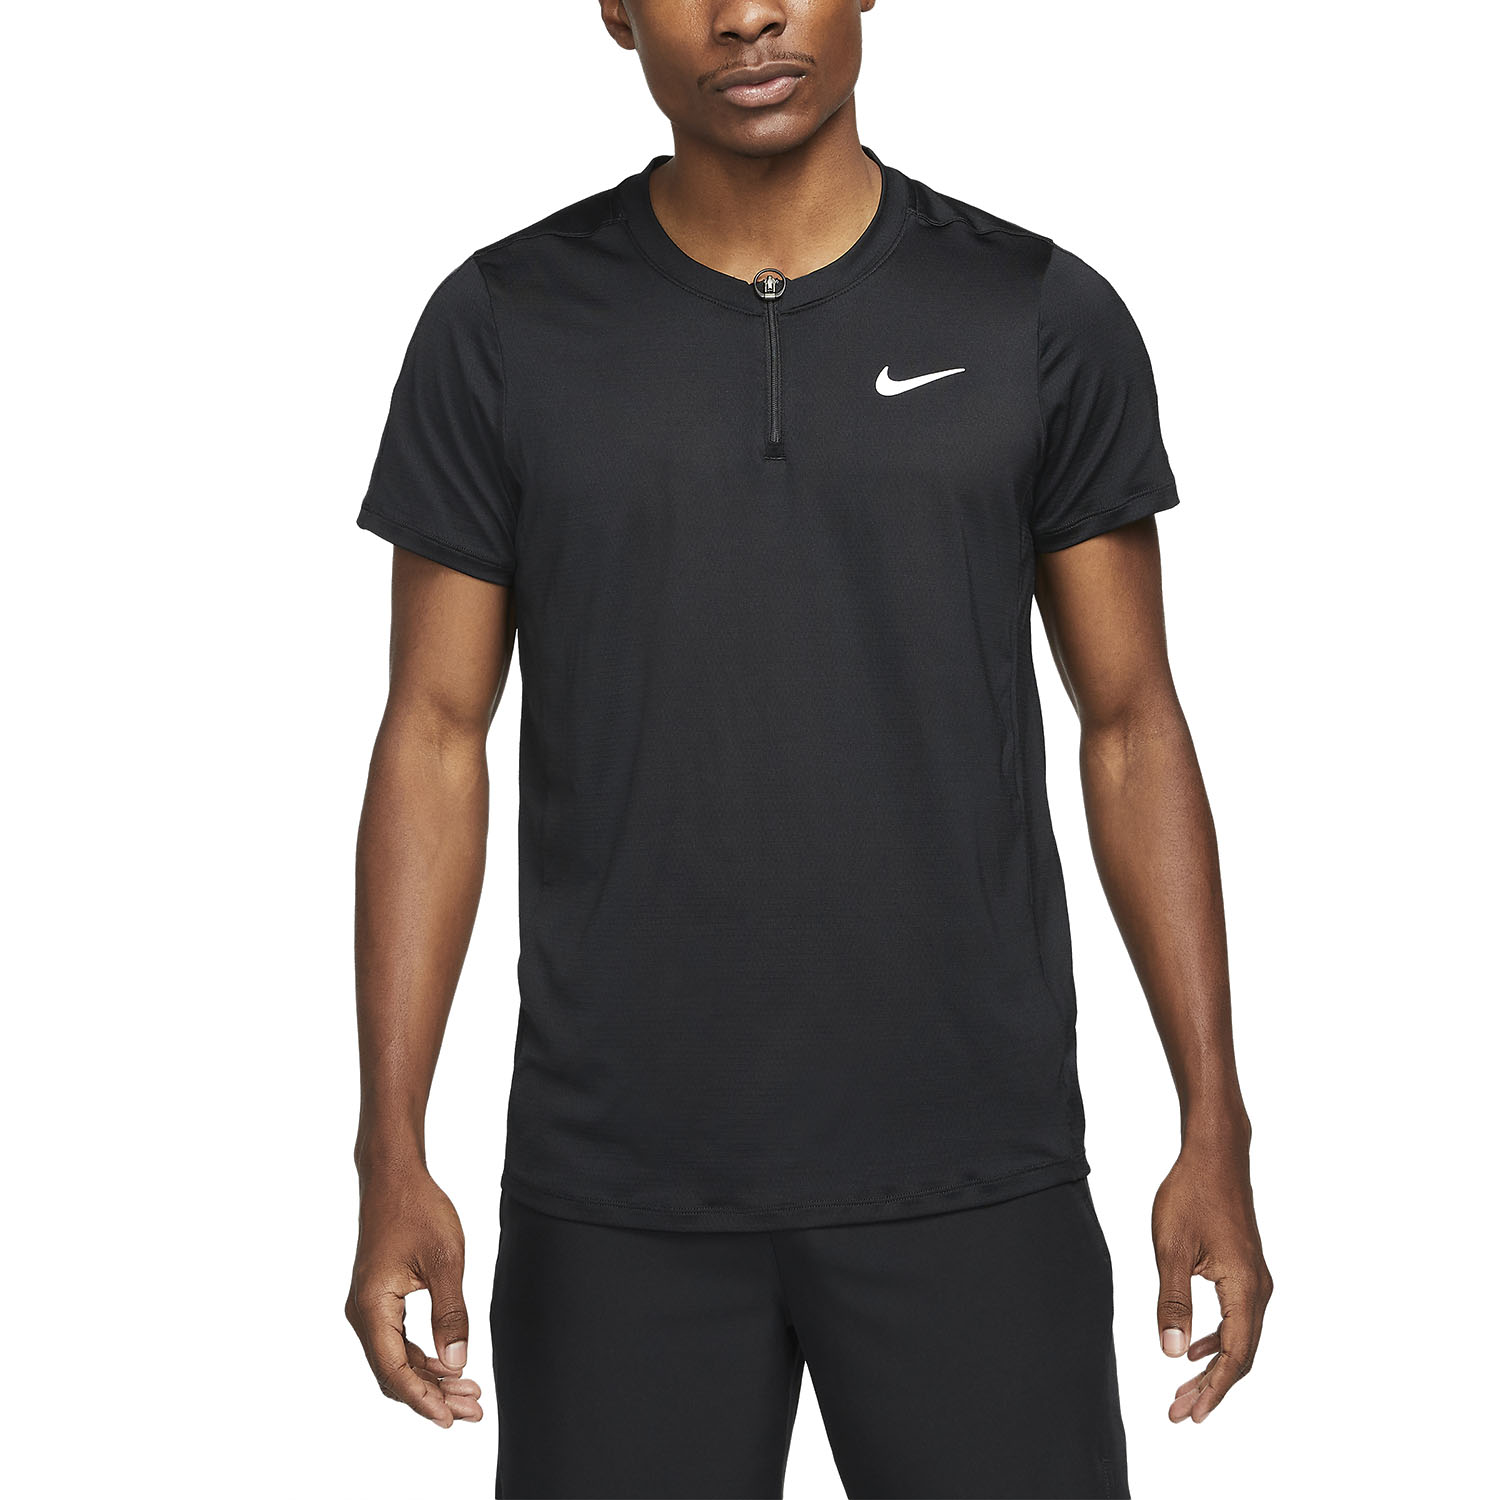 Entretener Deformar Trampas Nike Dri-FIT Advantage Polo de Tenis Hombre - Black/White